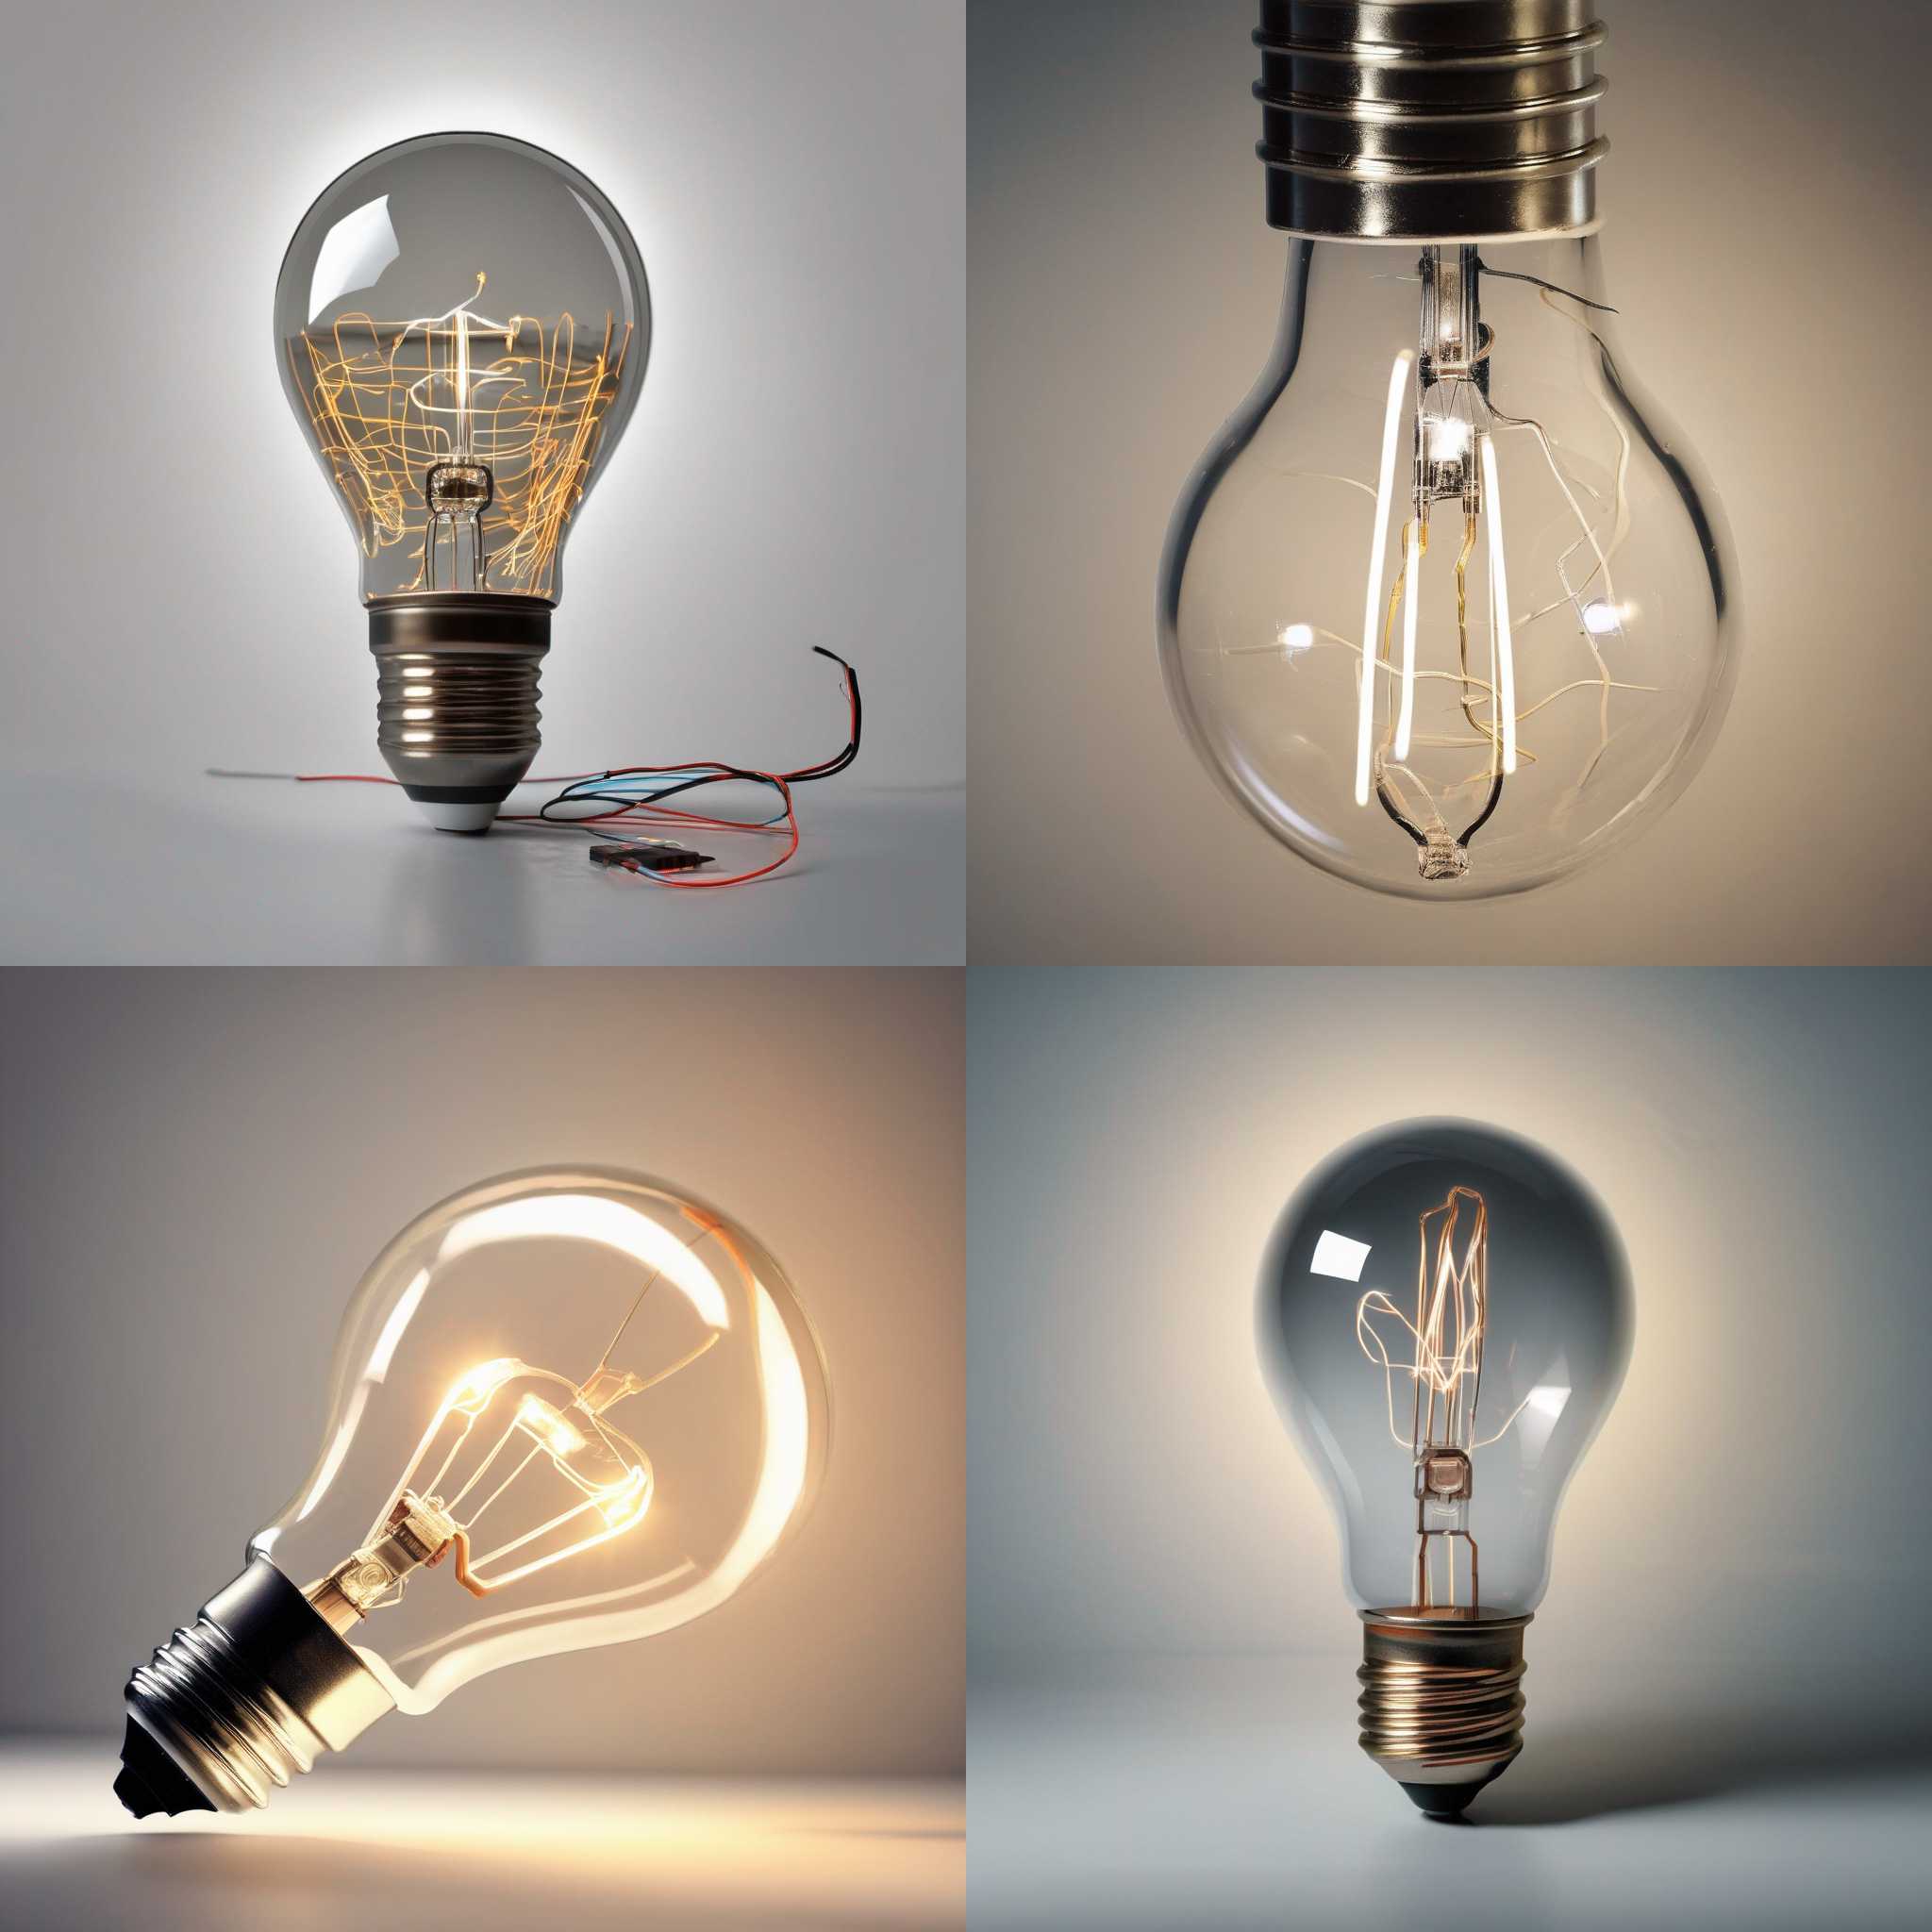 a lightbulb with a broken circuit